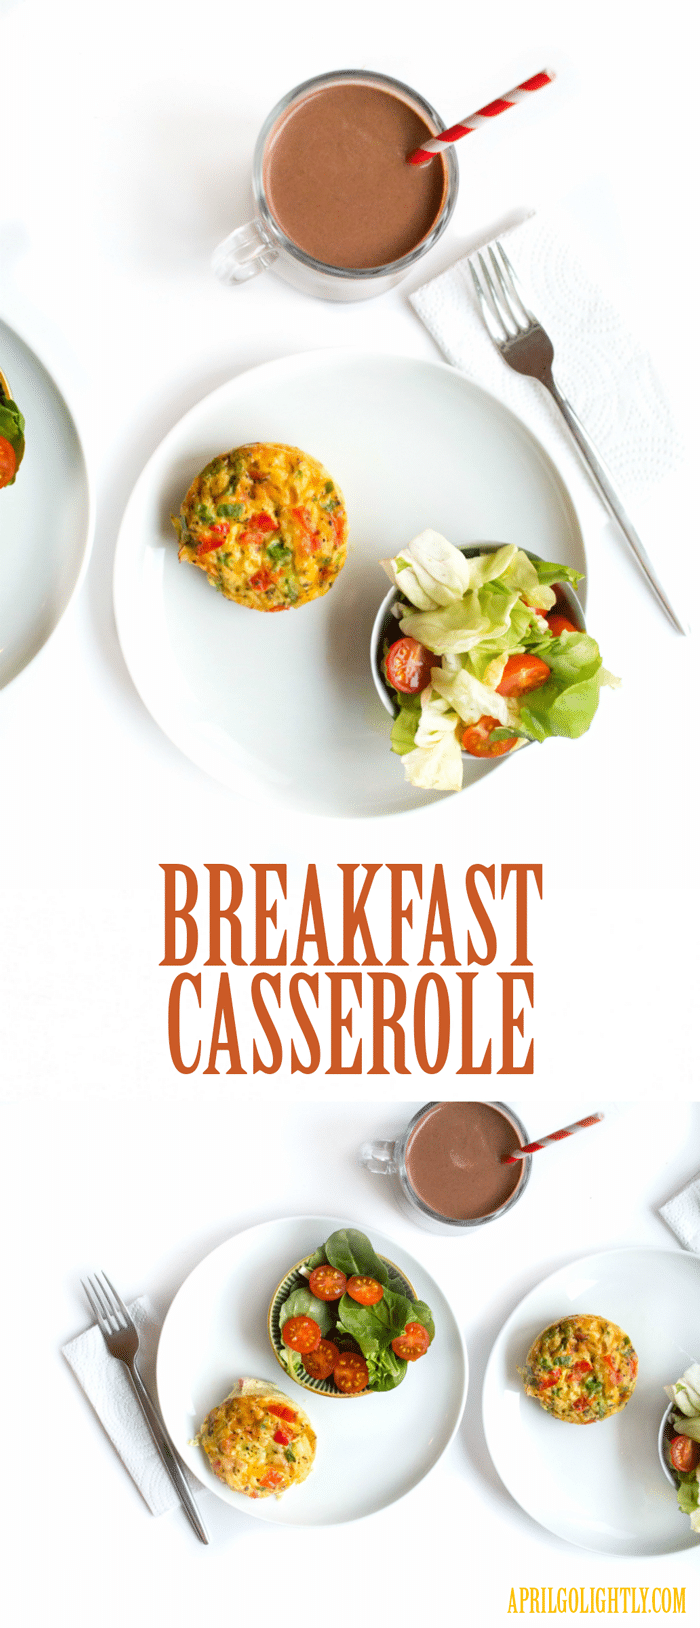 Breakfast Casserole Recipe from Food Blogger April Golightly 